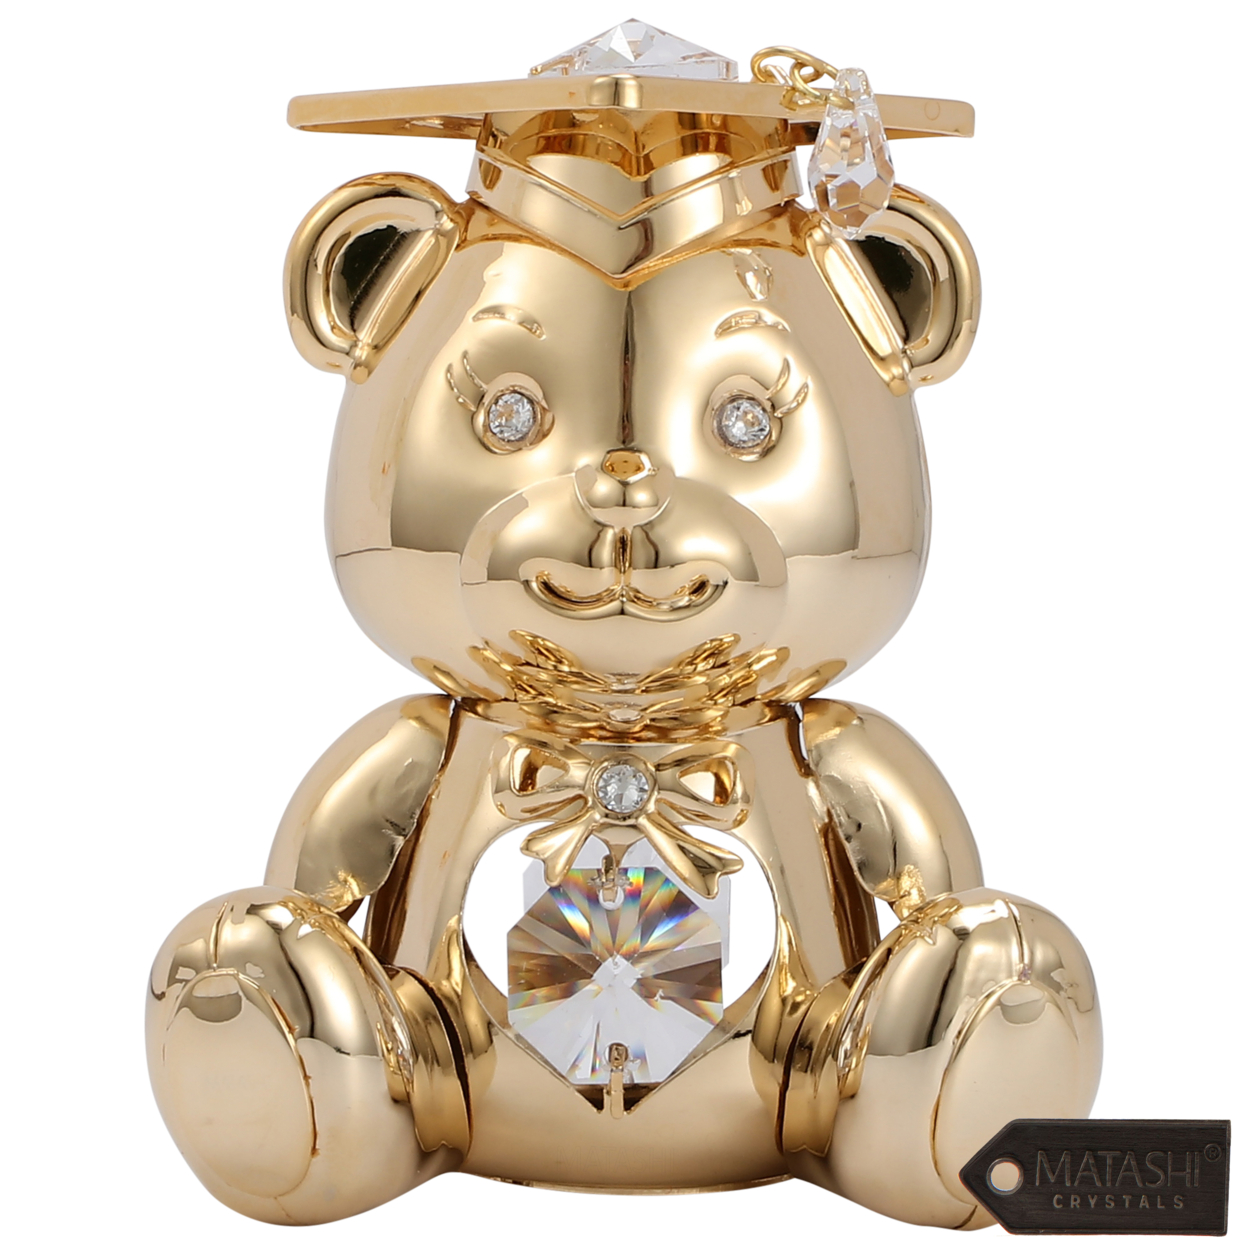 Matashi 24K Gold Plated Graduation Bear With Matashi Crystals Holiday Decor Gift For Christmas Mother's Day Birthday Anniversary